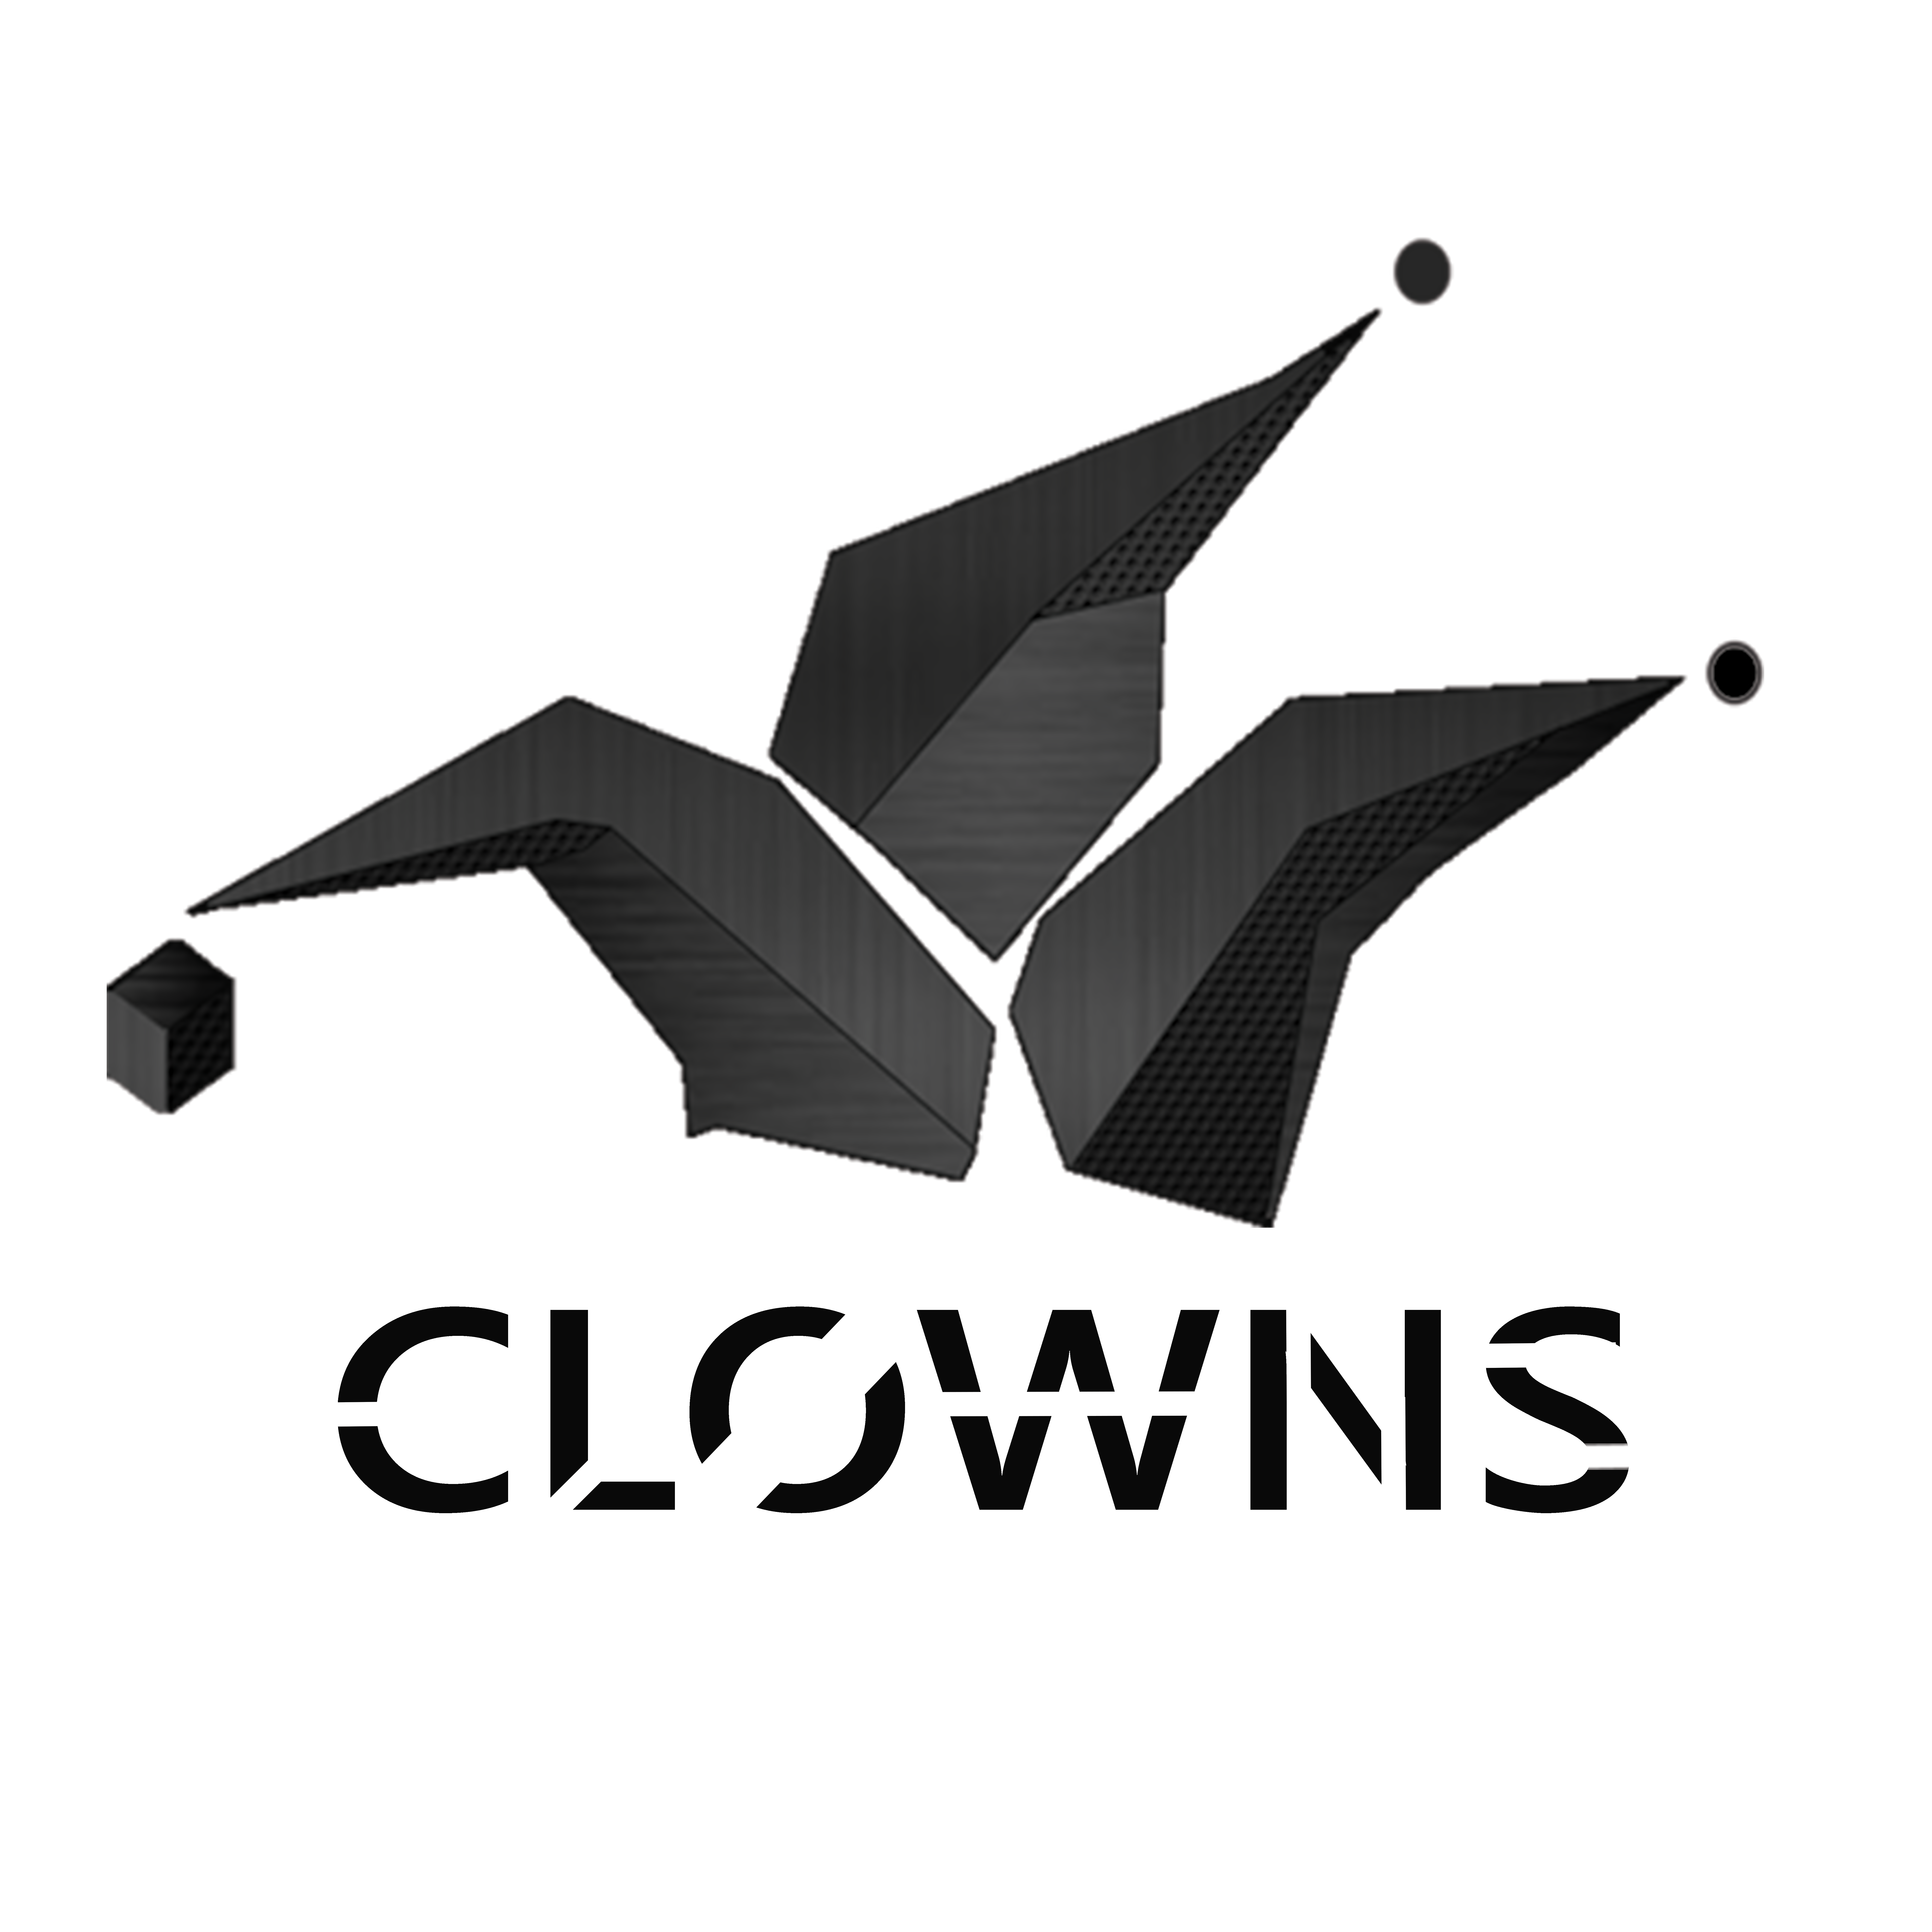 Business logo of Clowns interior furniture & crafts